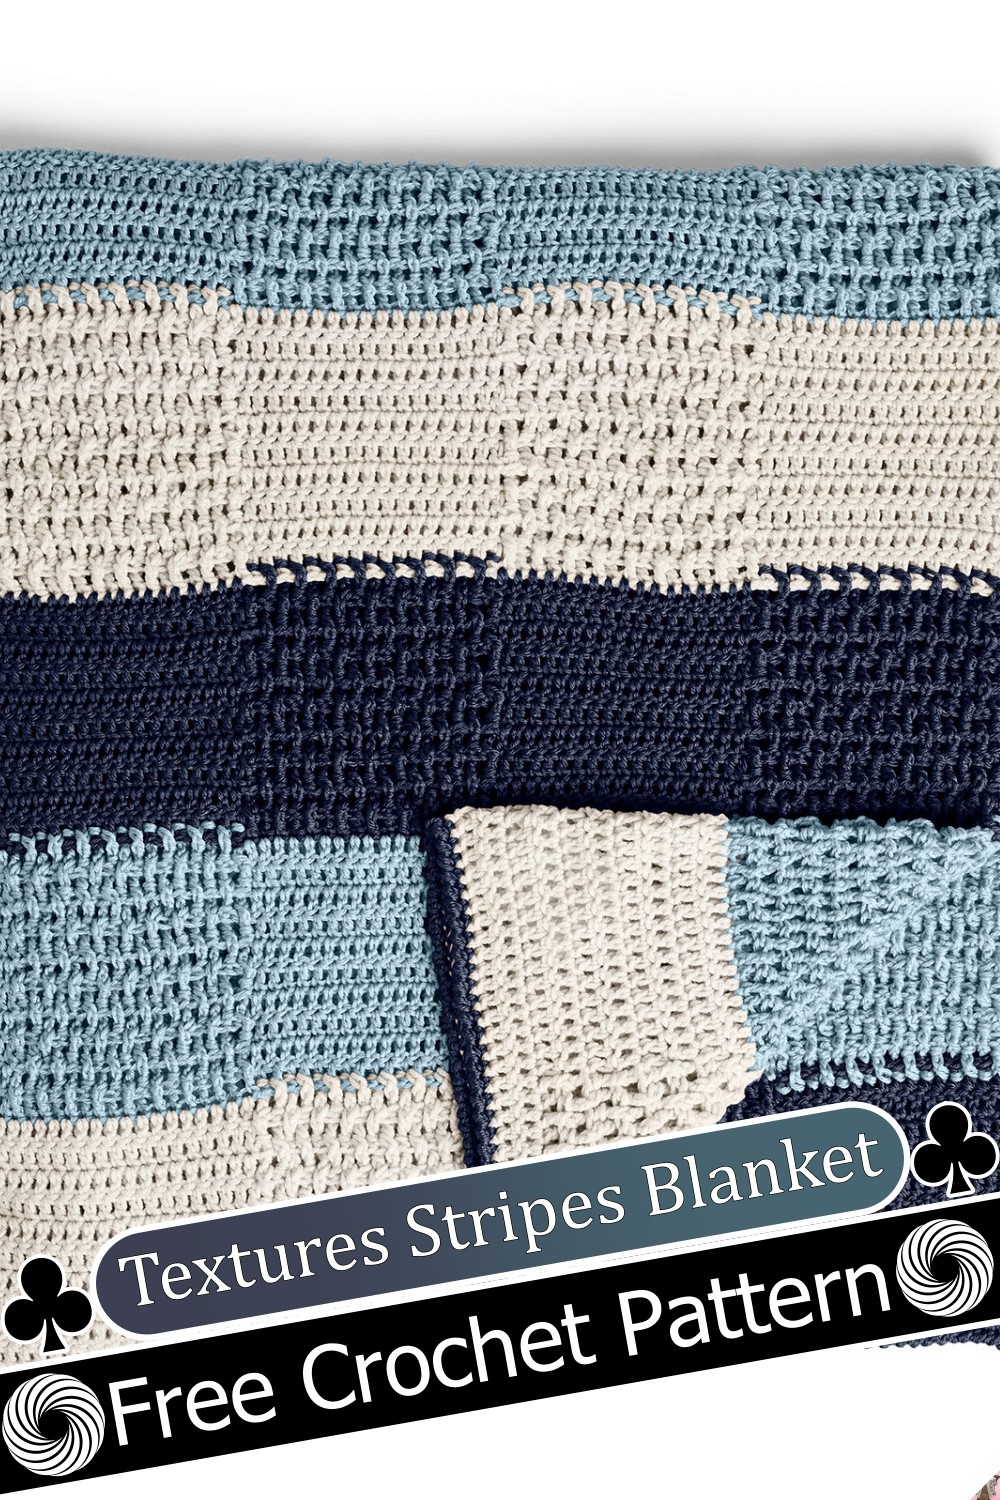 Textures Stripes Blanket